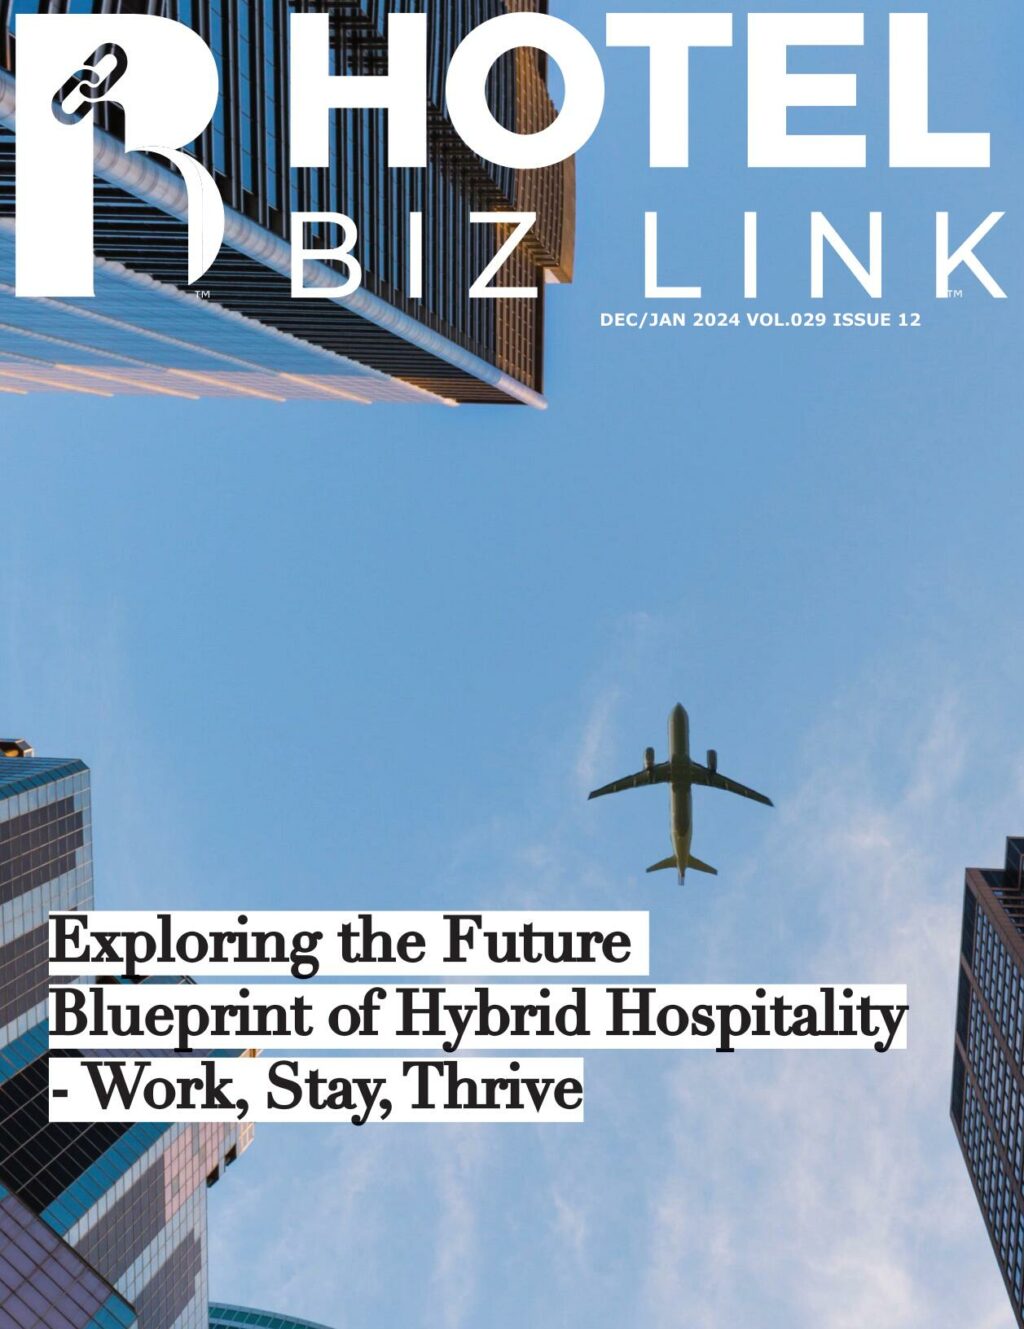 HotelBizLink Dec-Jan 2024 Hospitality Magazine